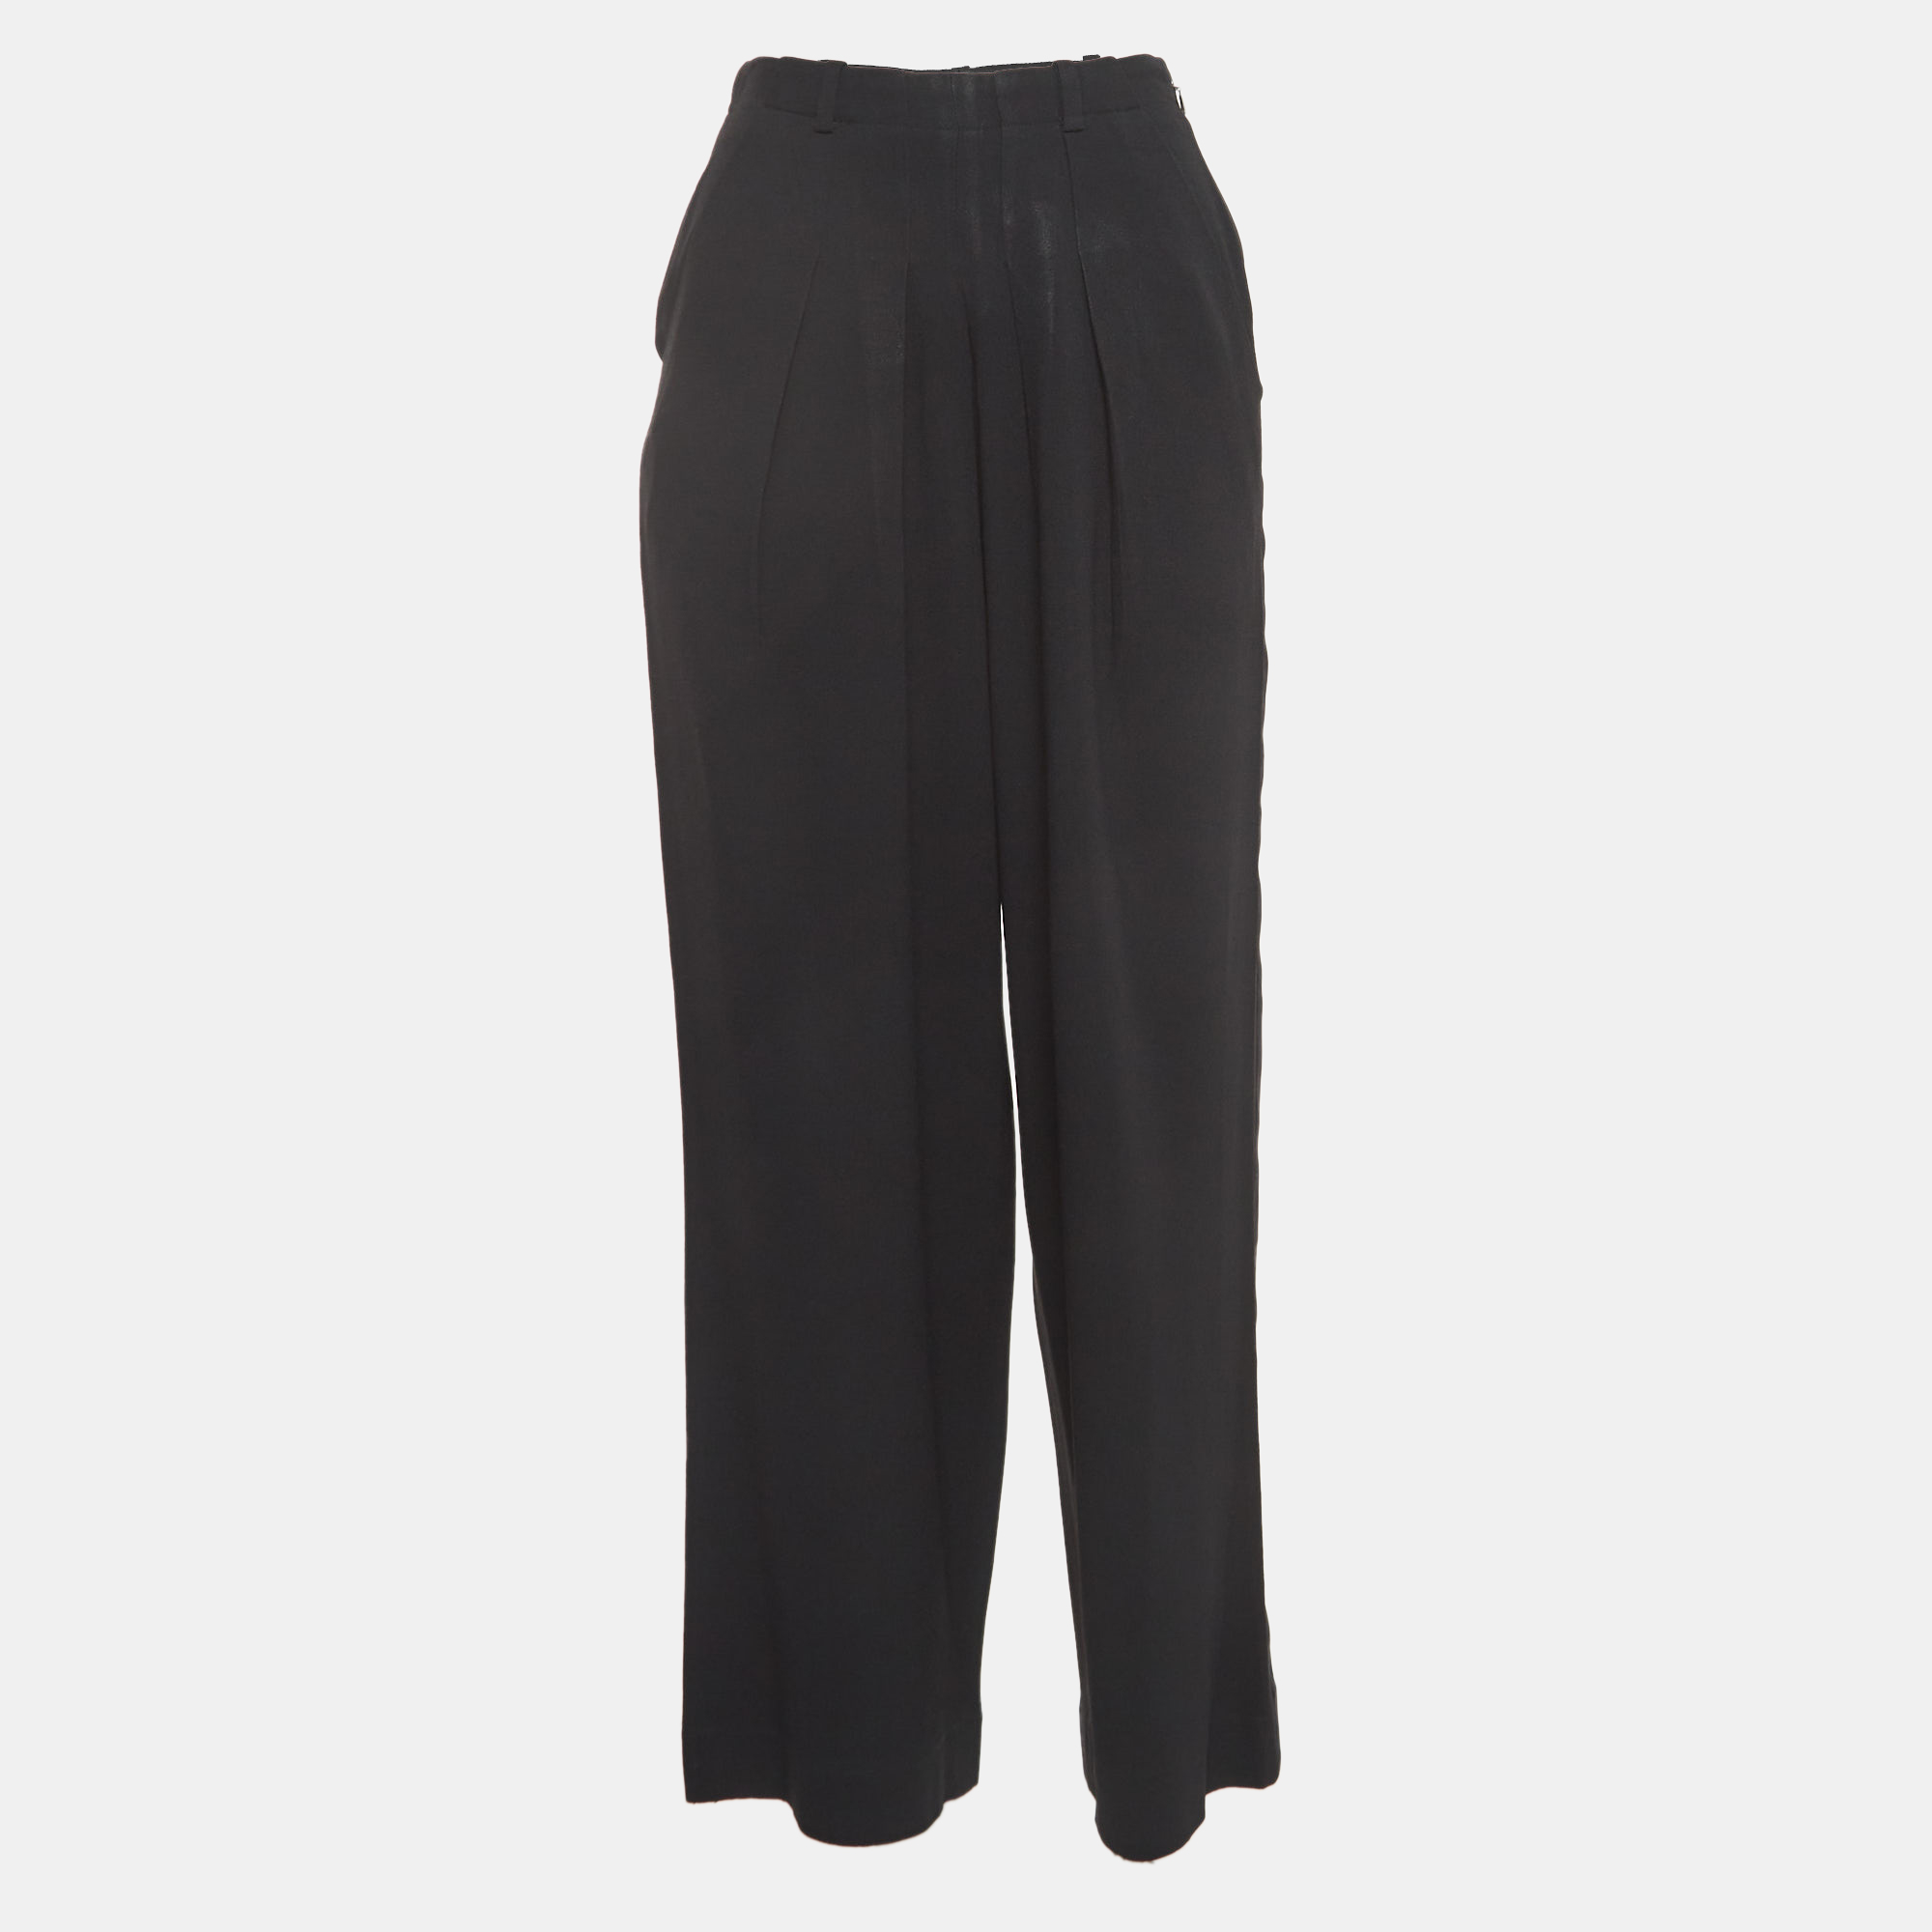 Chloe black crepe pleated trousers xs